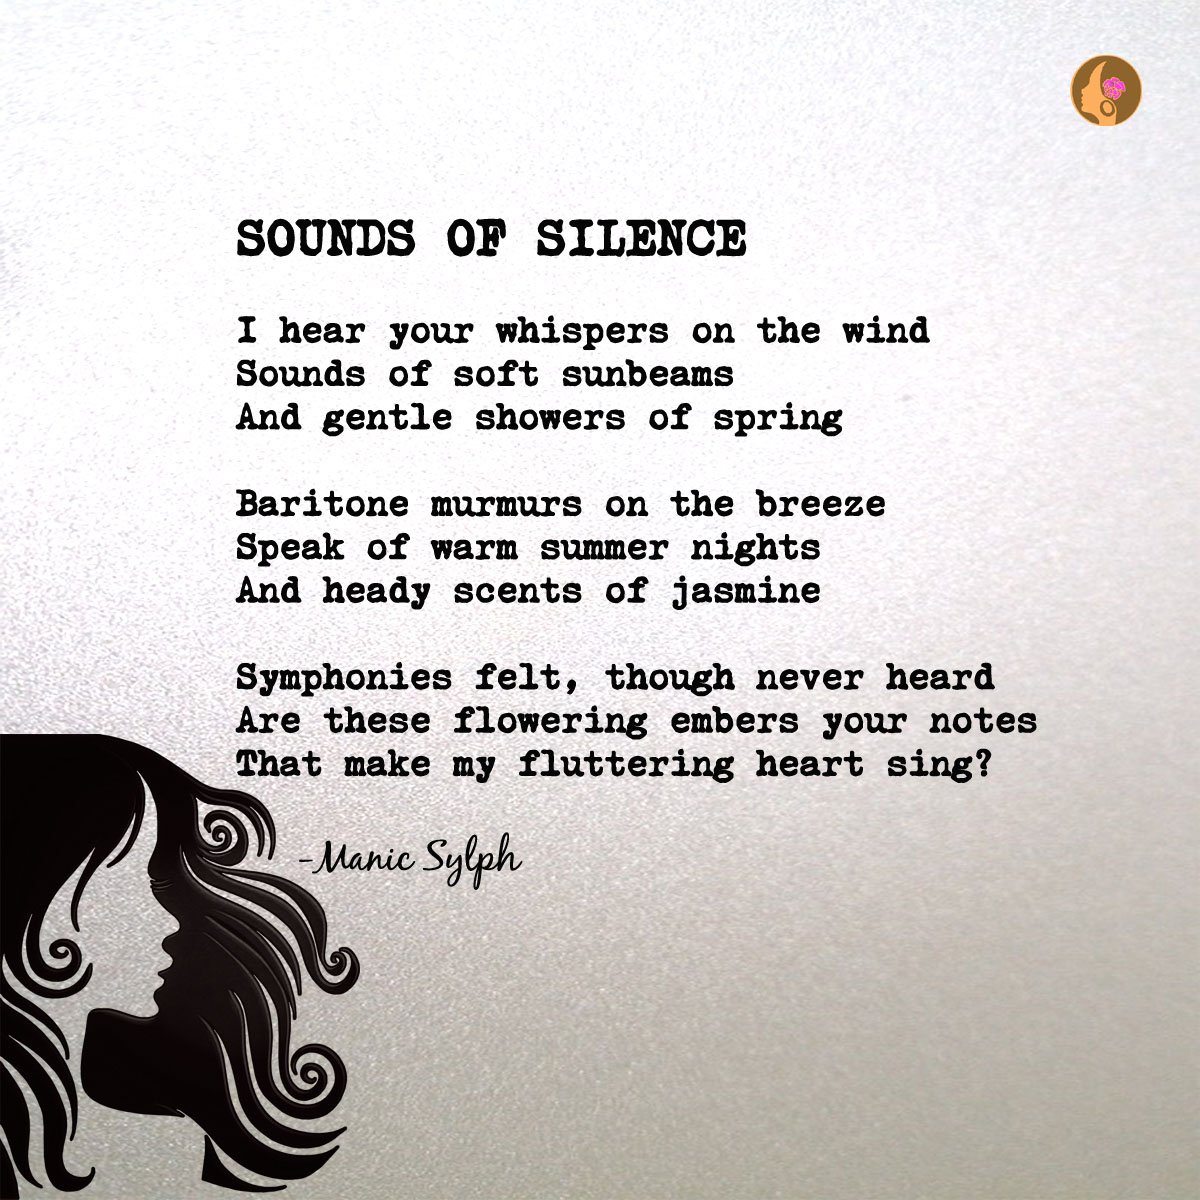 sound of silence poem